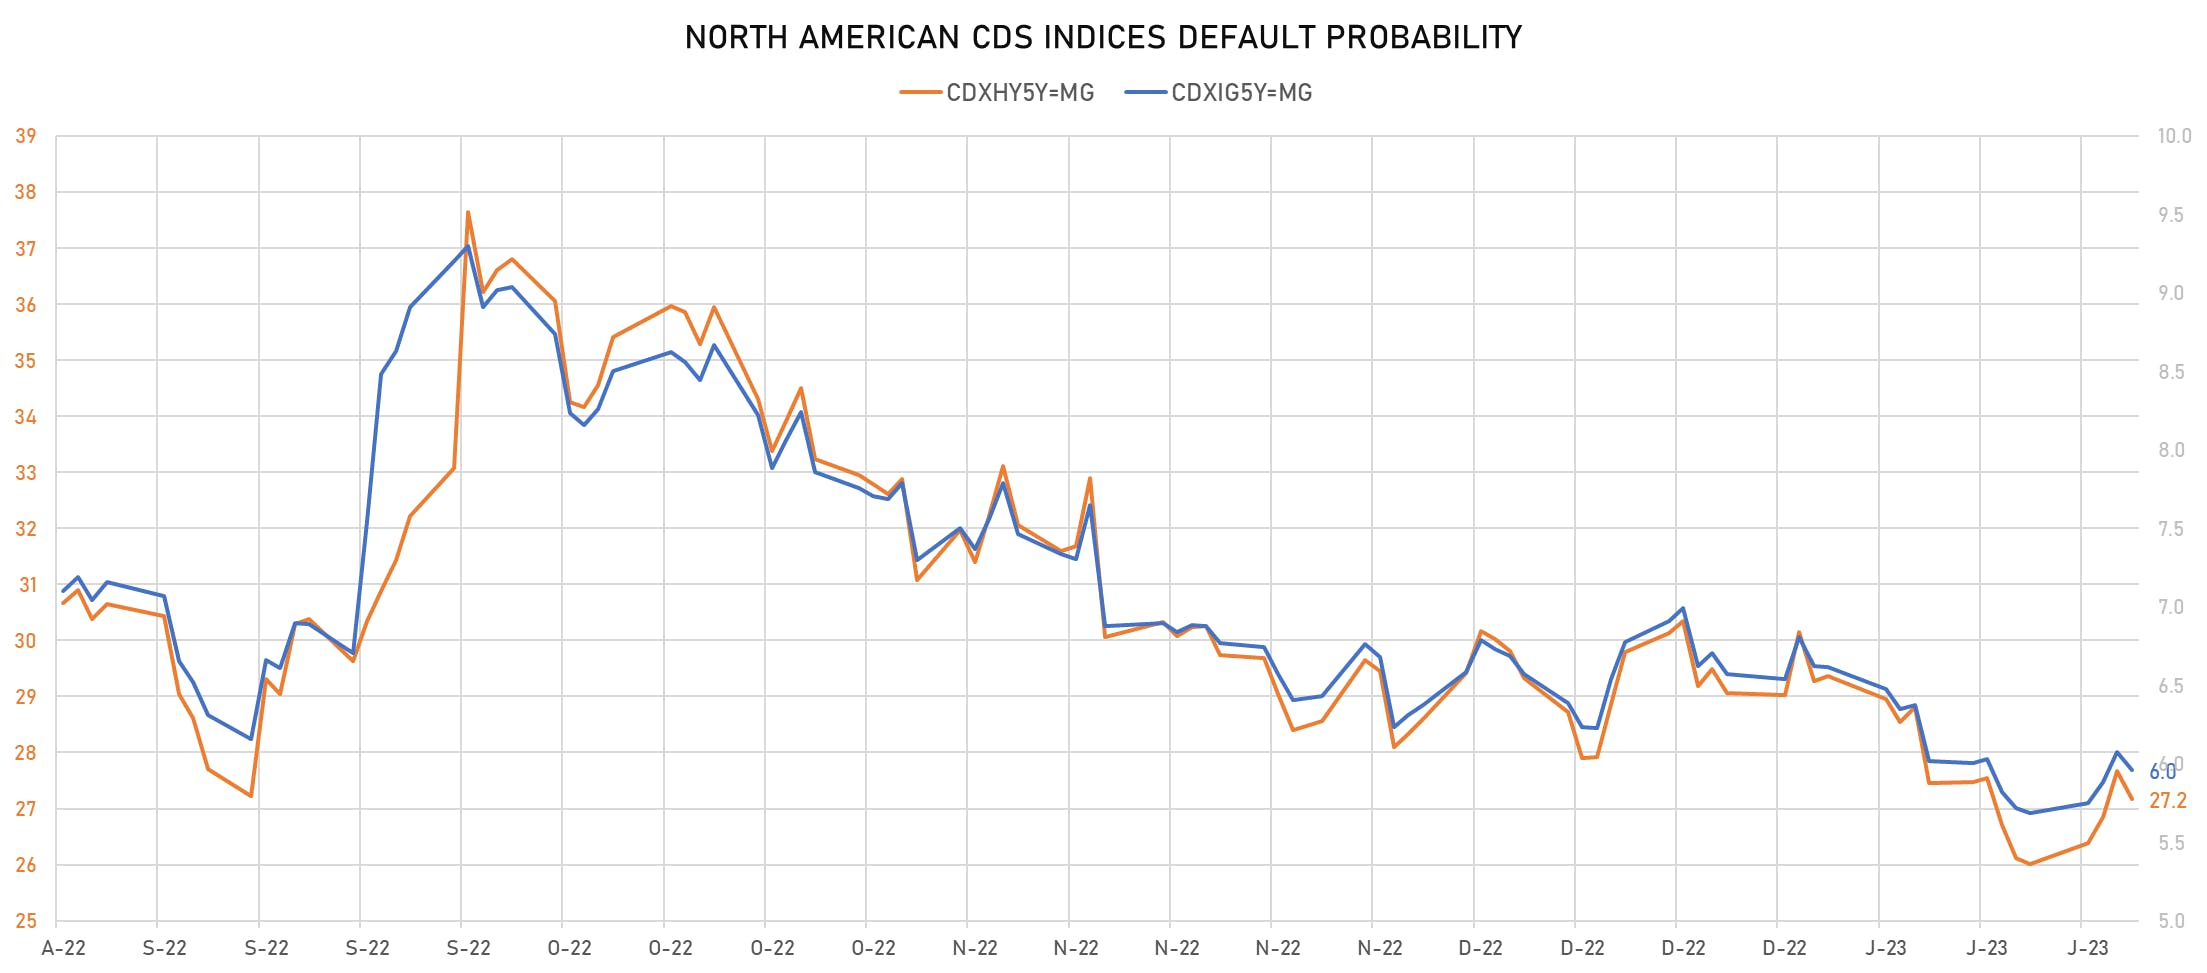 CDX NA Implied Default Probabilities | Sources: phipost.com, Refinitiv data